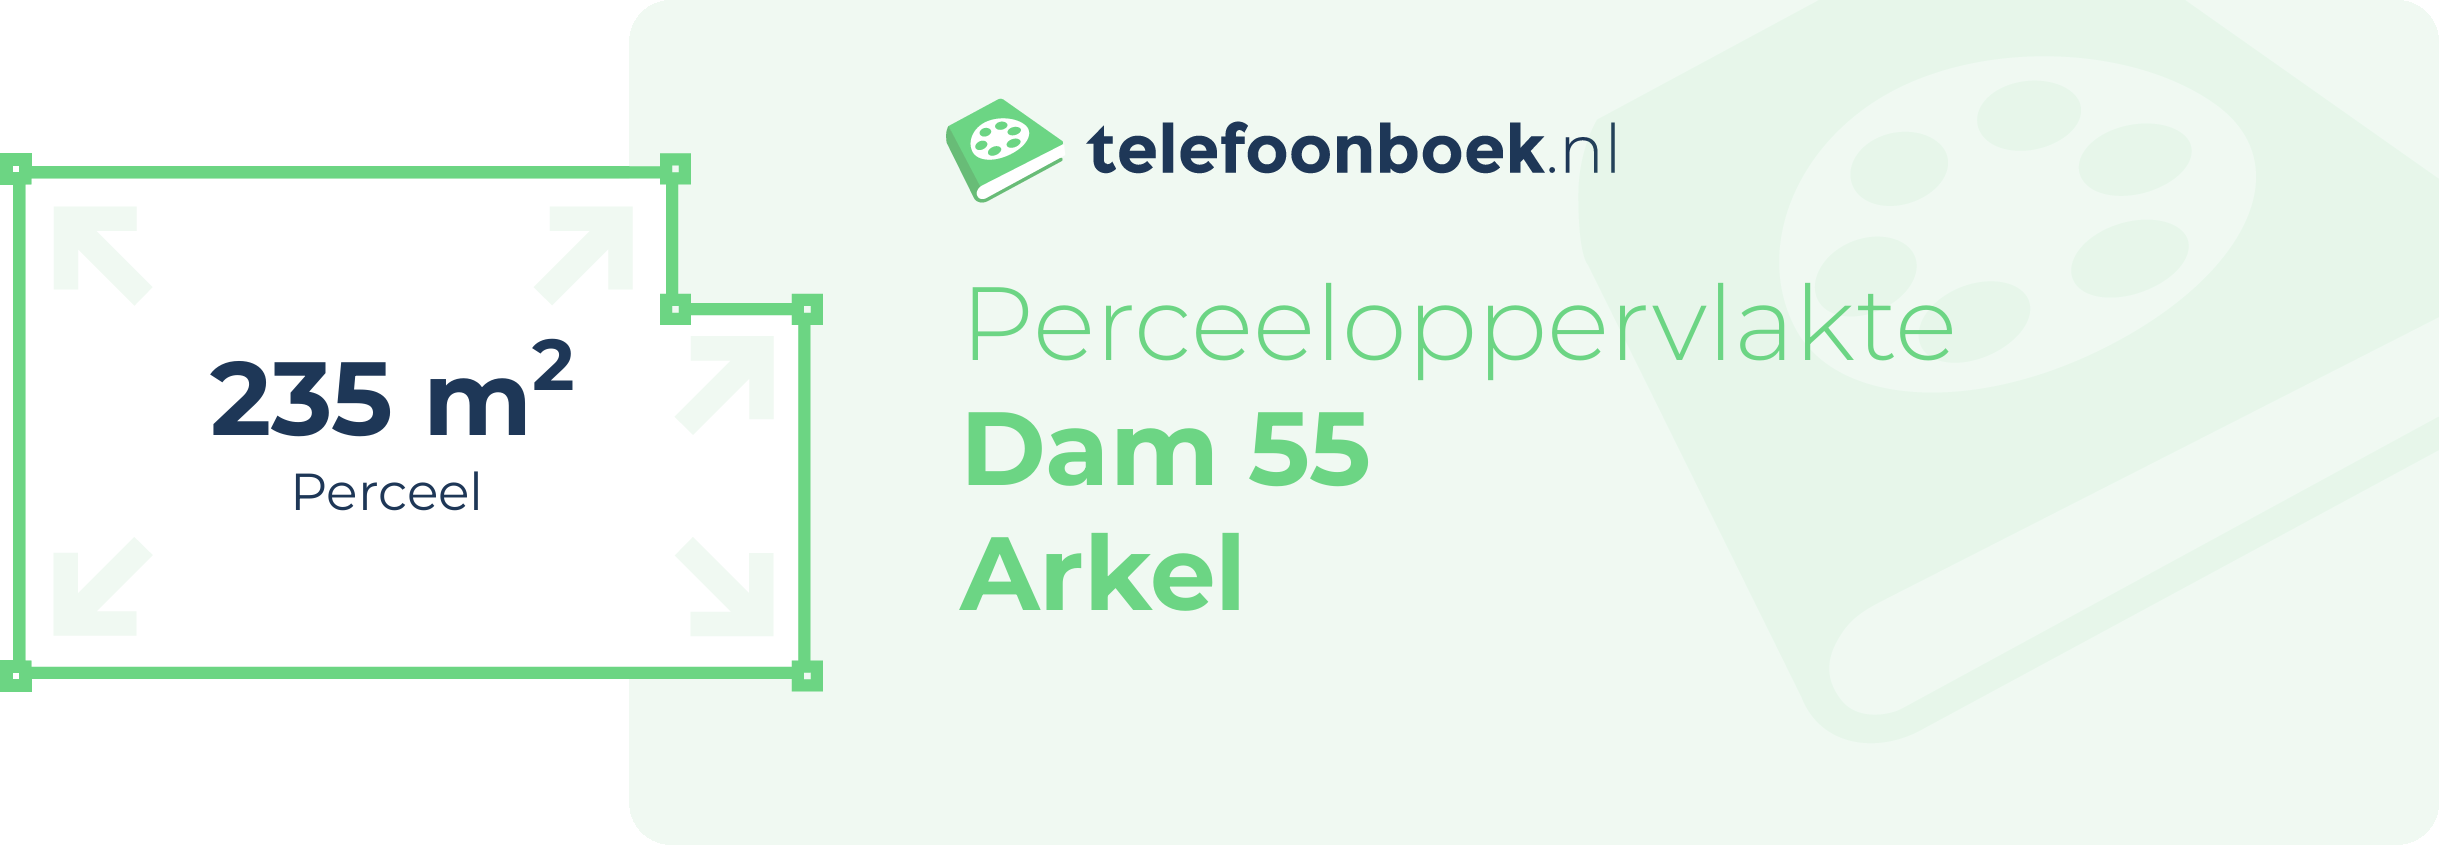 Perceeloppervlakte Dam 55 Arkel